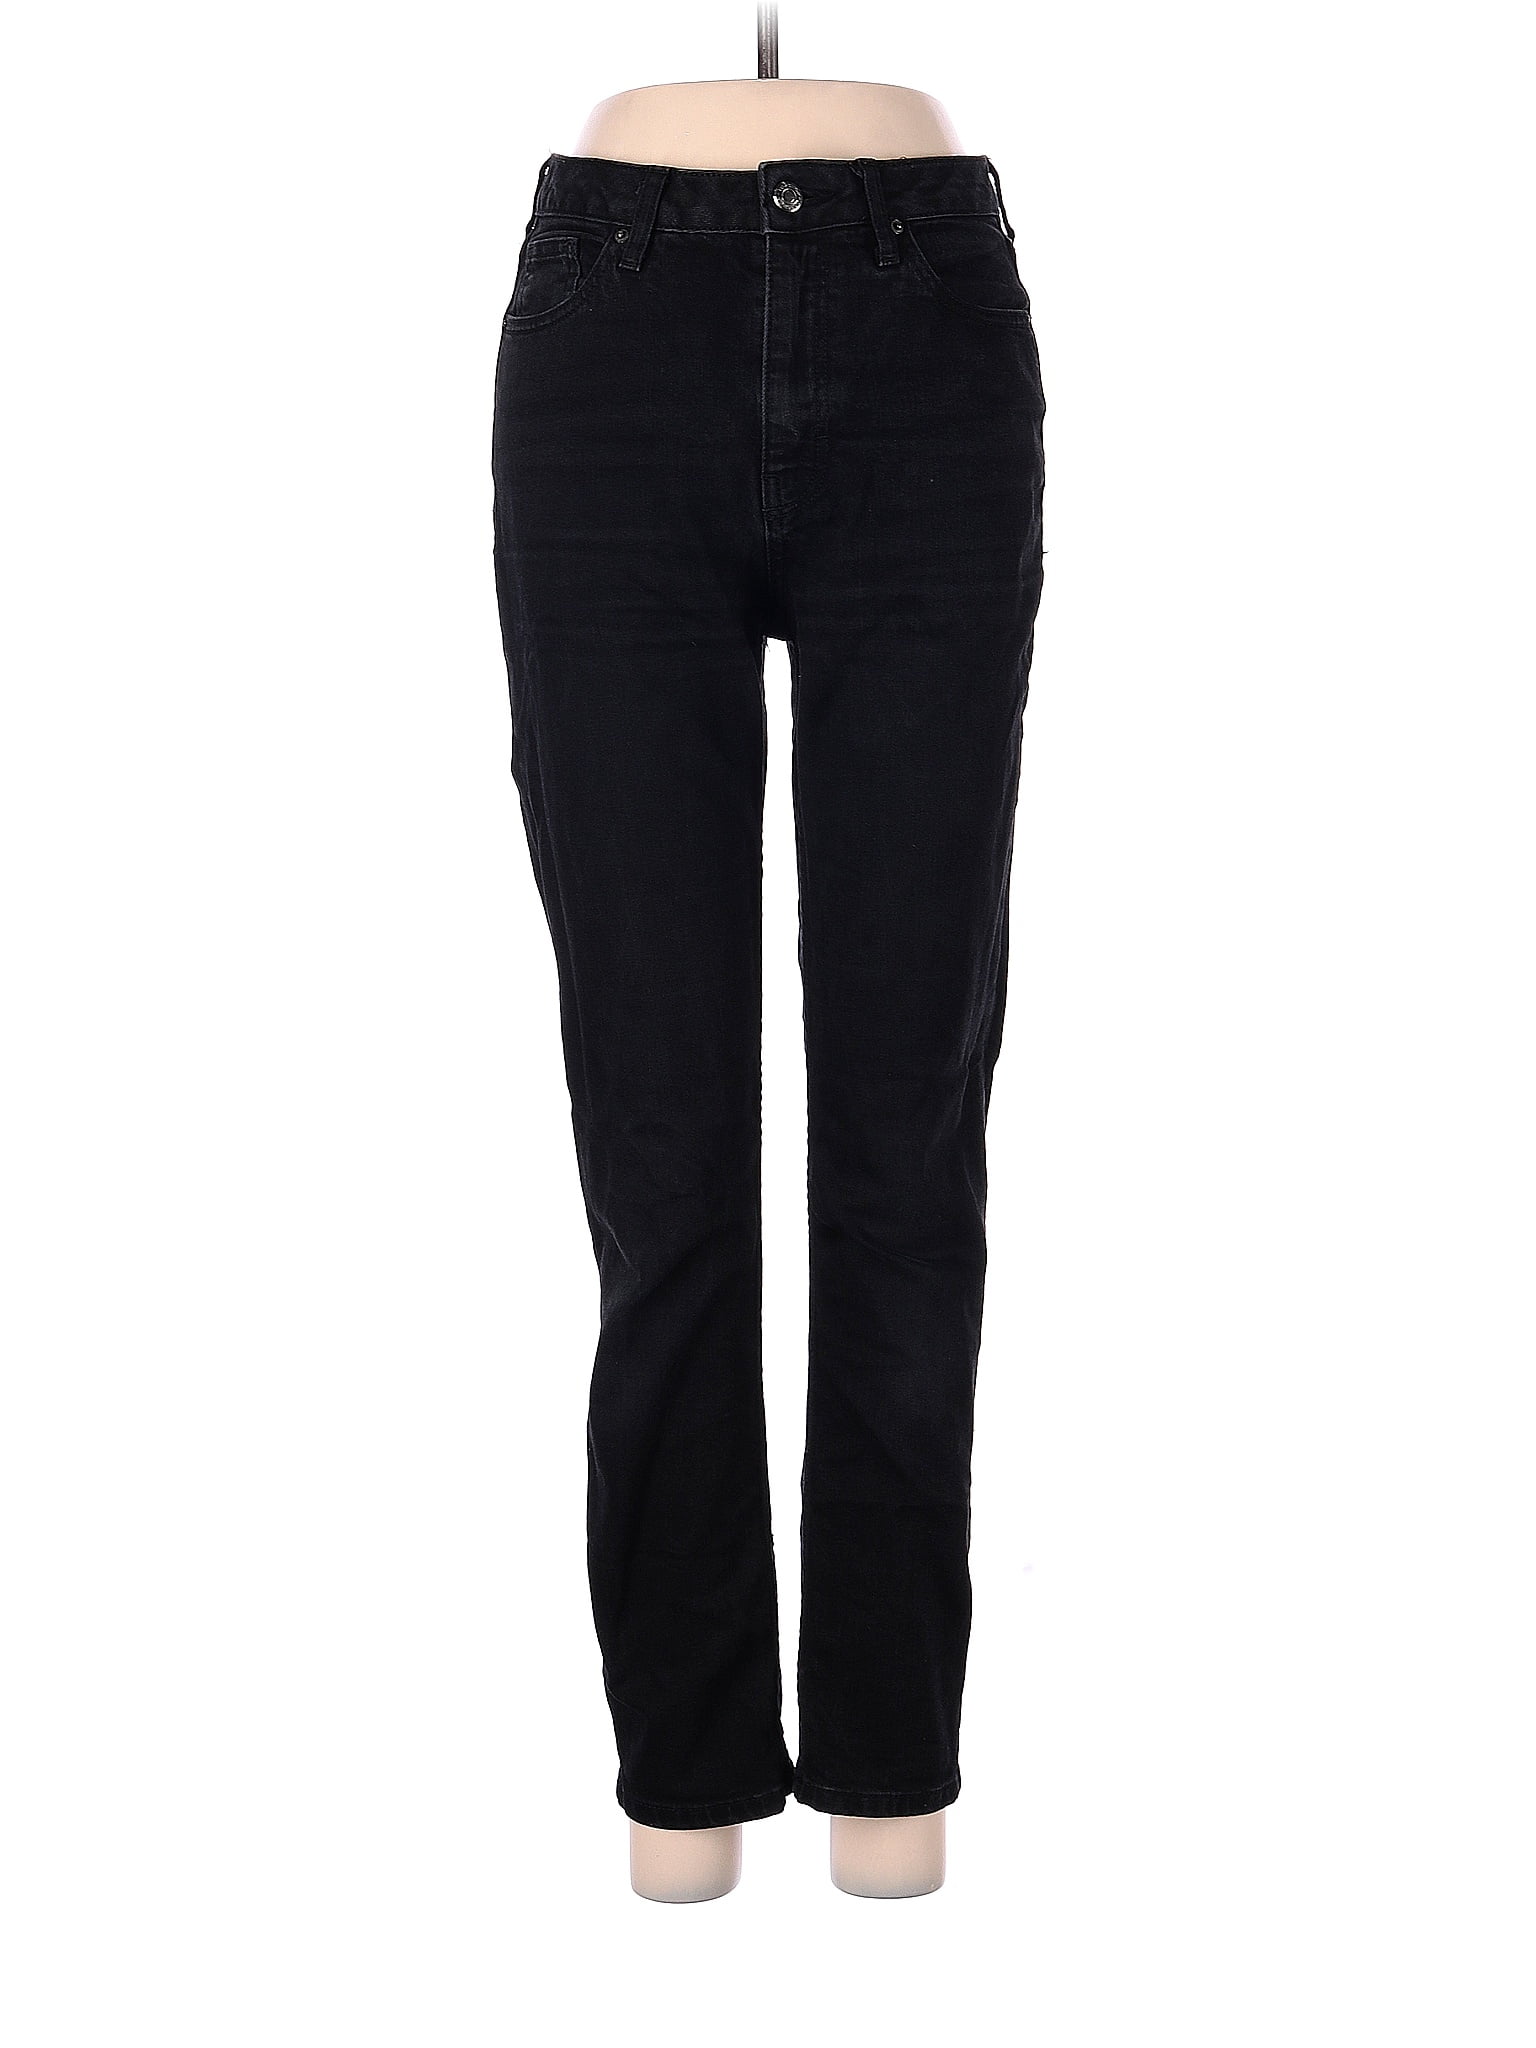 Topshop Black Jeans 28 Waist - 86% off | ThredUp